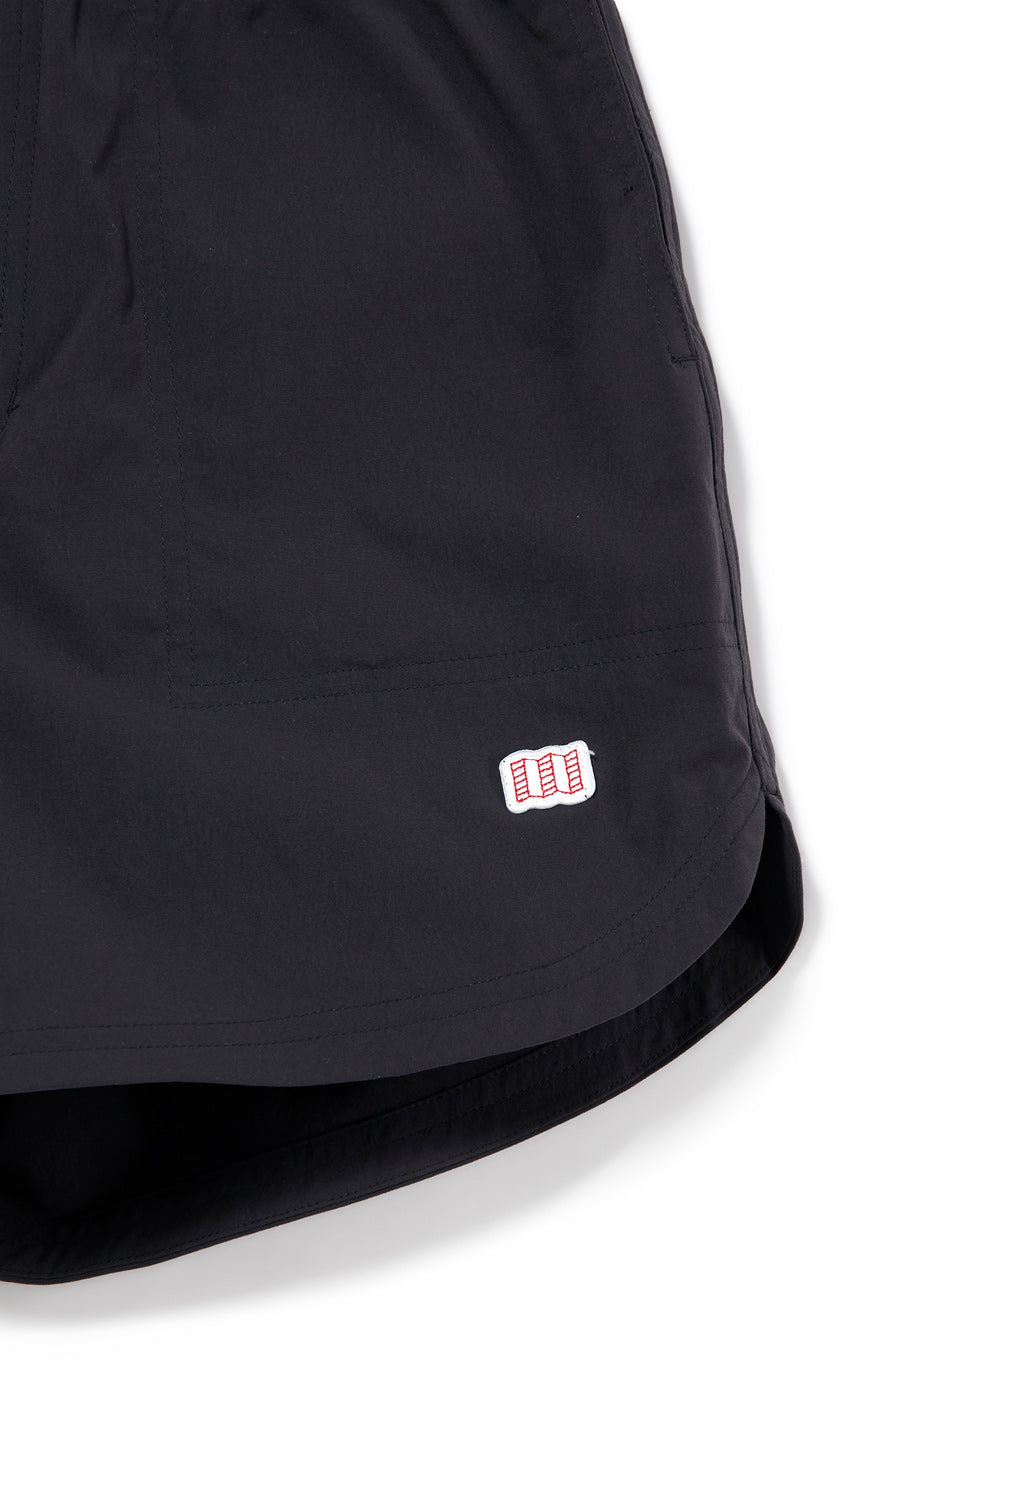 Topo Designs Women's River Shorts - Black